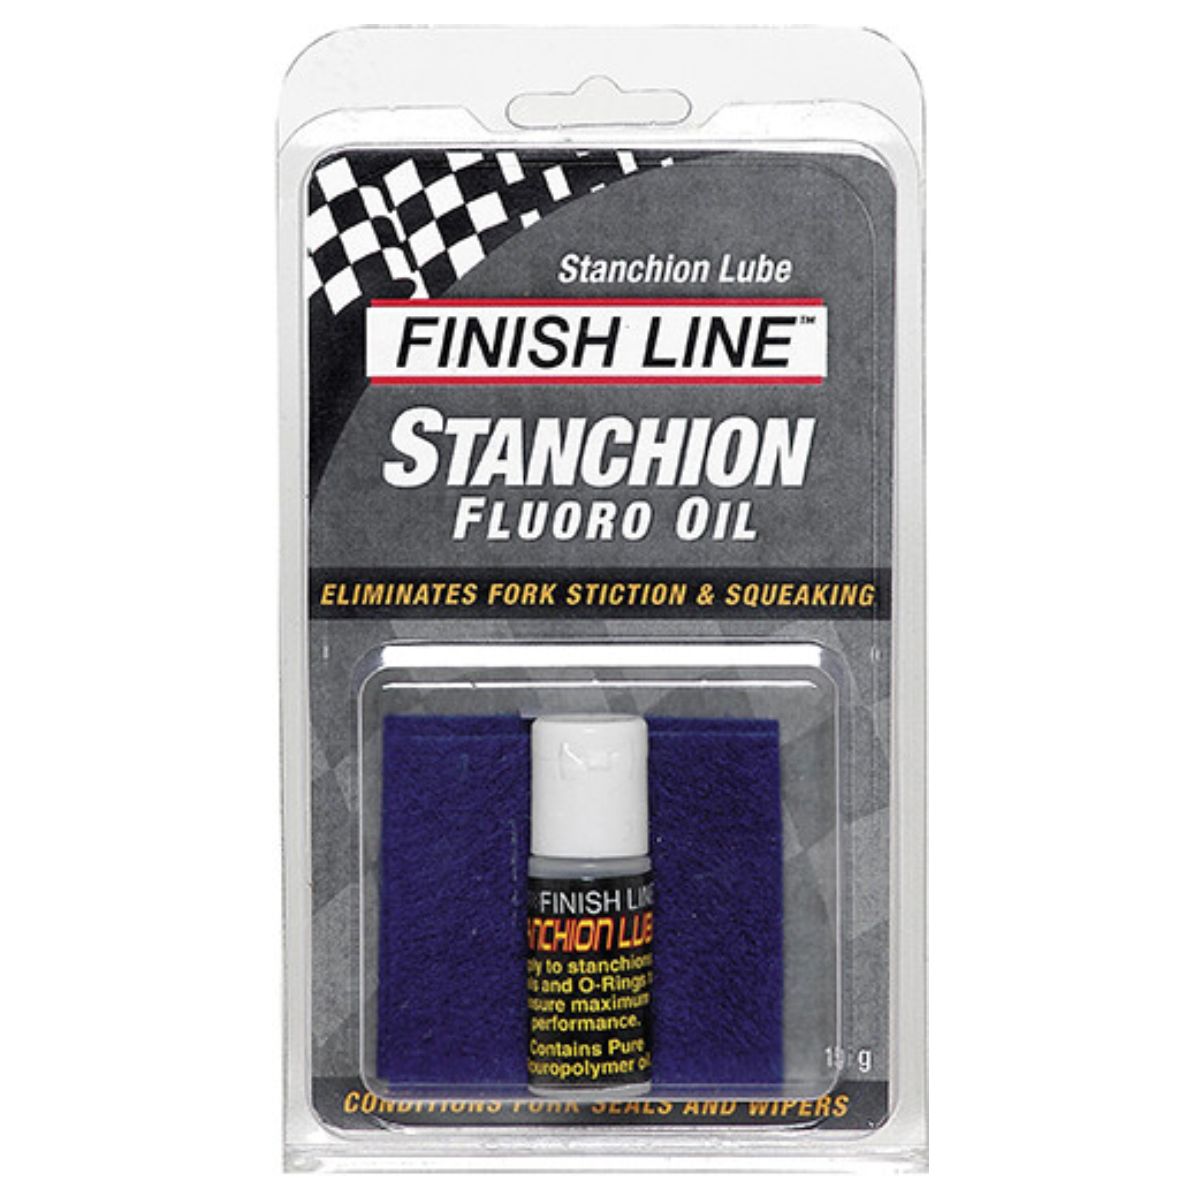 Finish line stanchion fluoro oil 15g